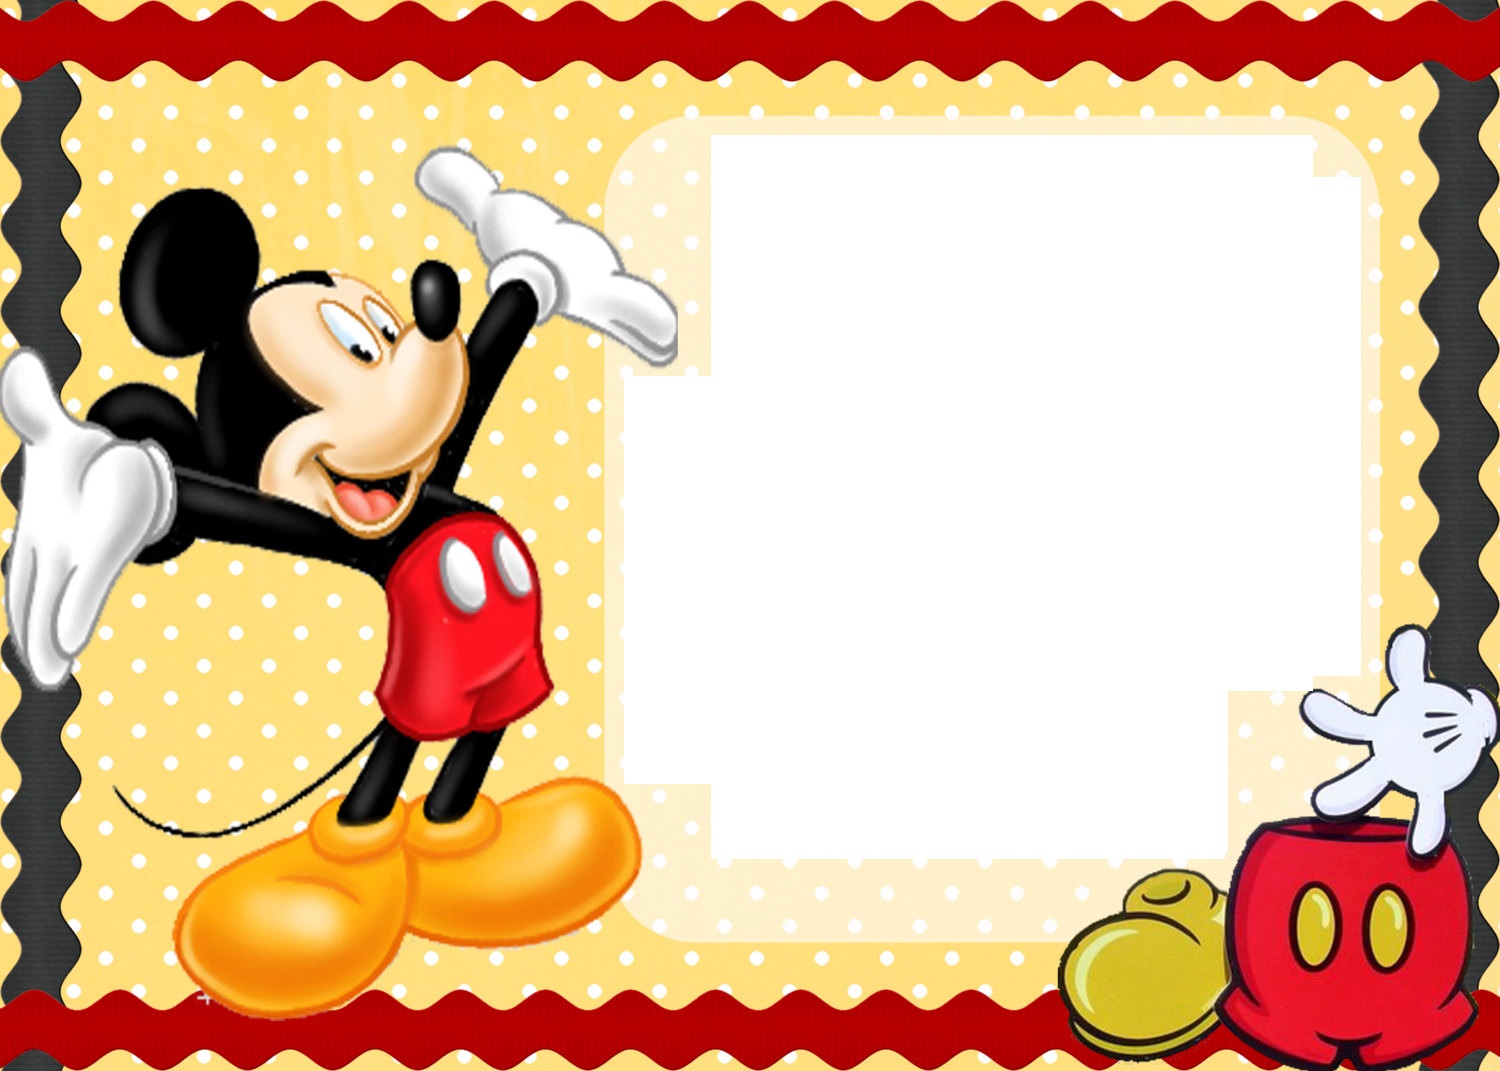 Free Printable Mickey Mouse Birthday Cards   Luxury Lifestyle Design